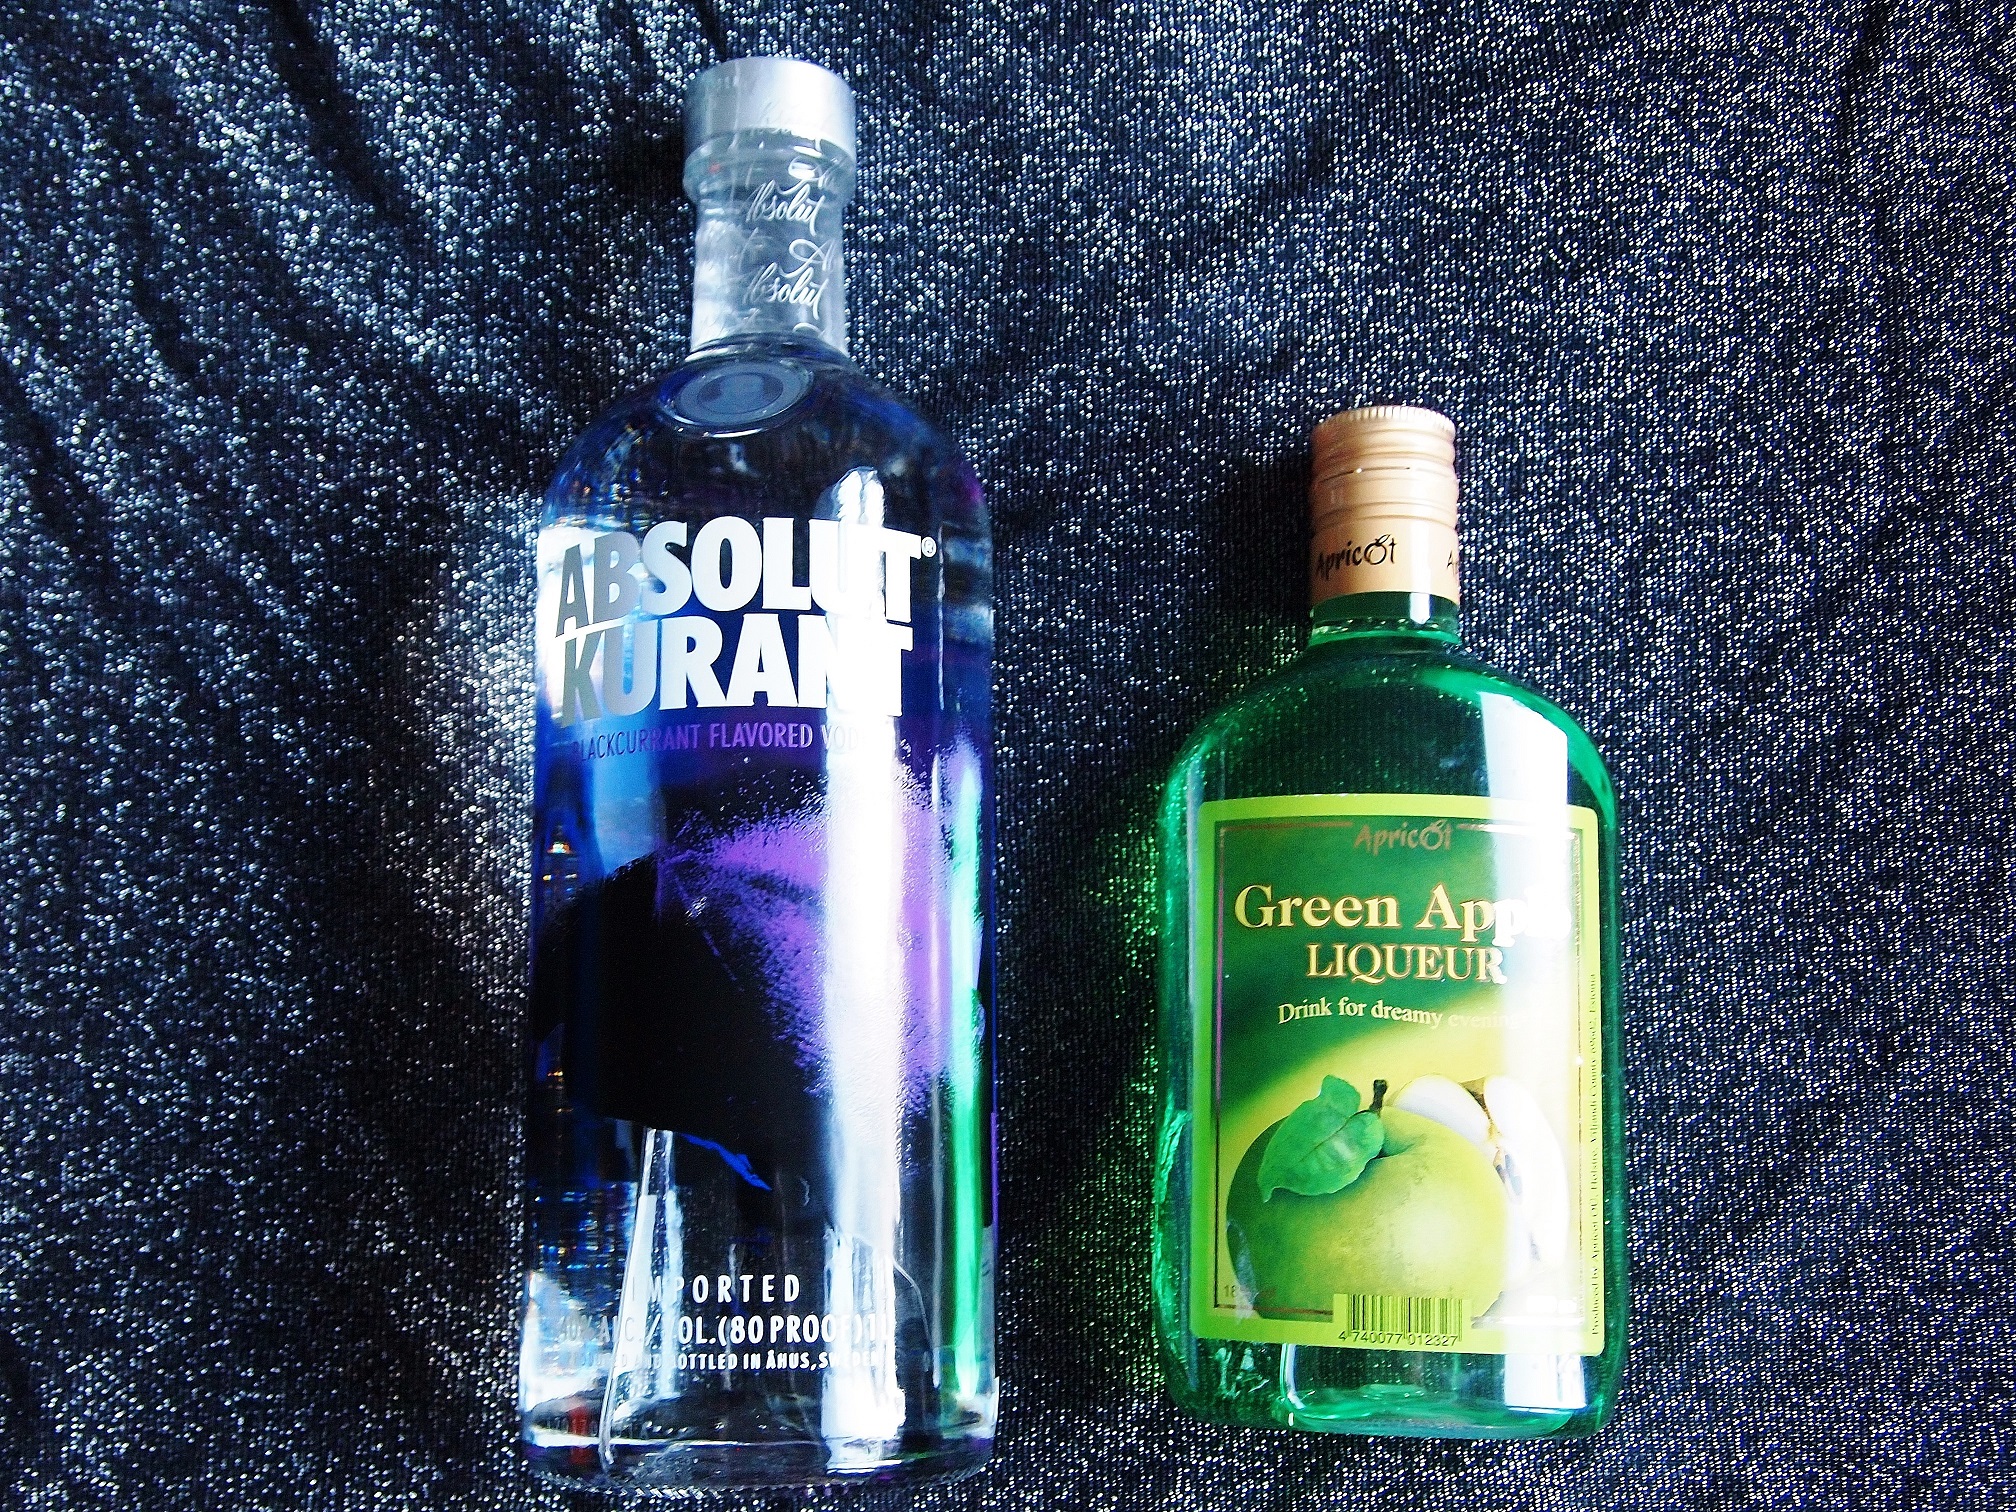 Absolut Kurant vodka, Apricot Green Apple Liqueur